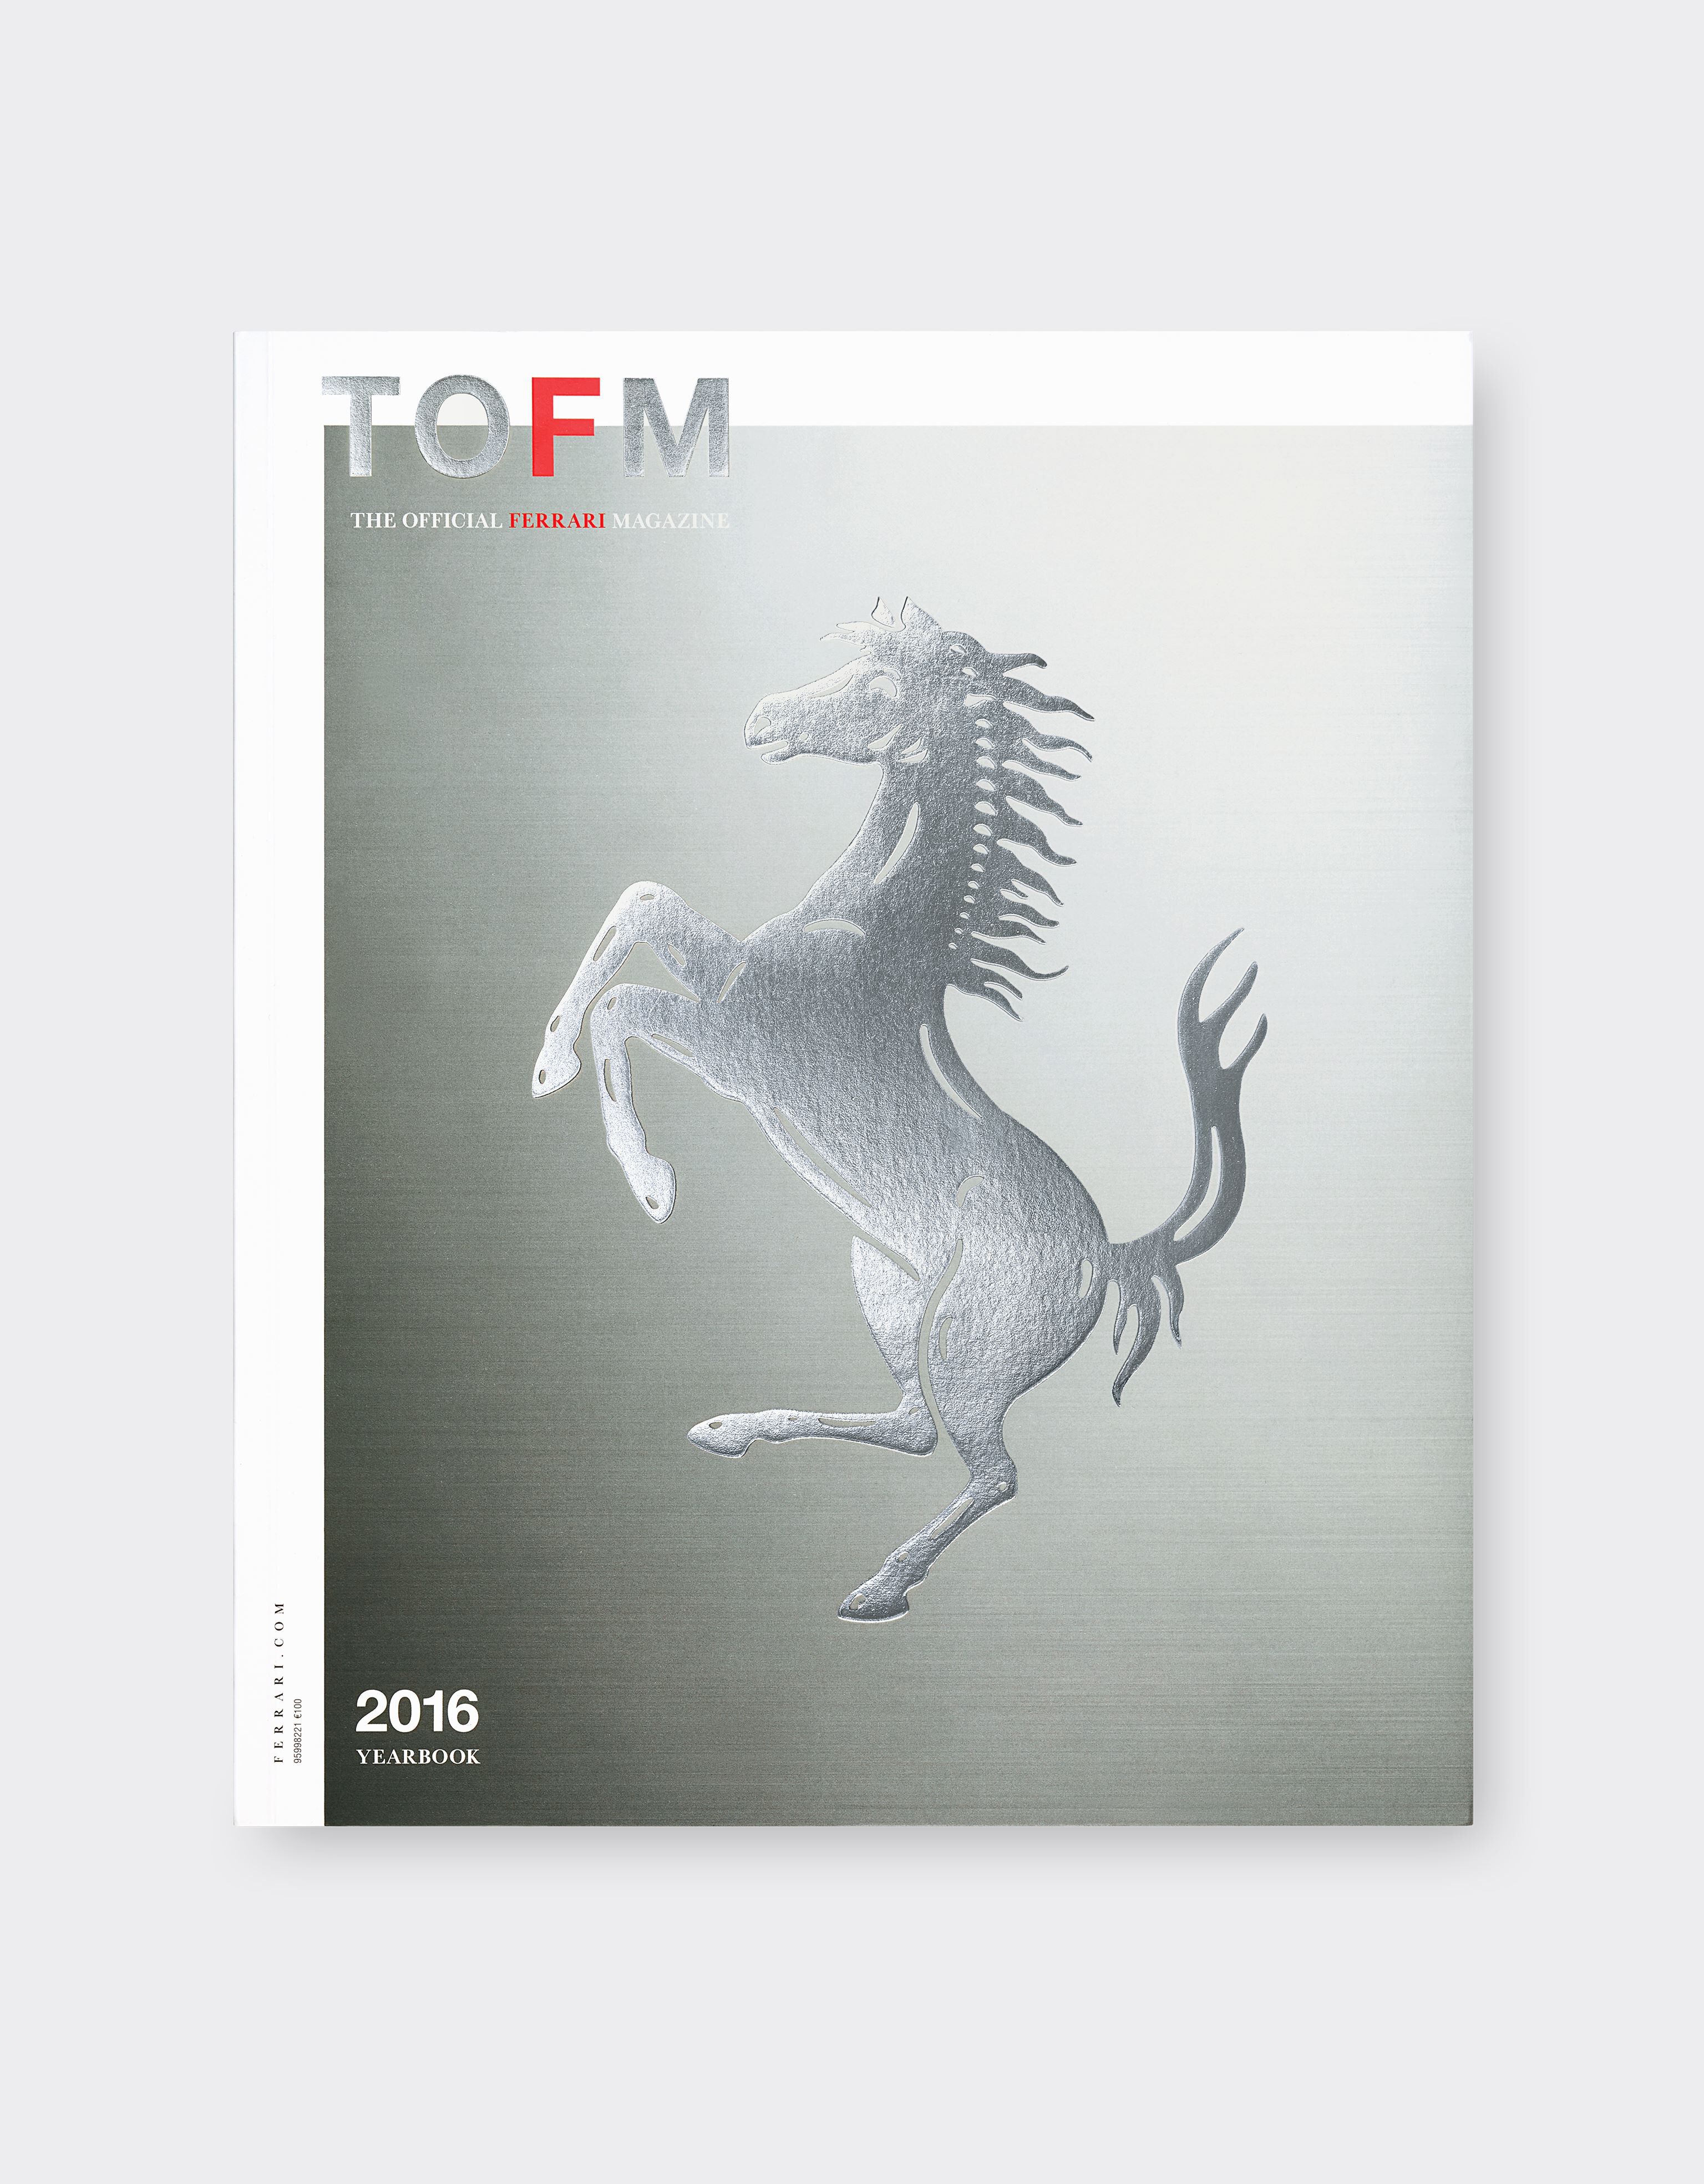 Ferrari The Official Ferrari Magazine numéro 34 - Annuaire 2016 MULTICOLORE 15389f